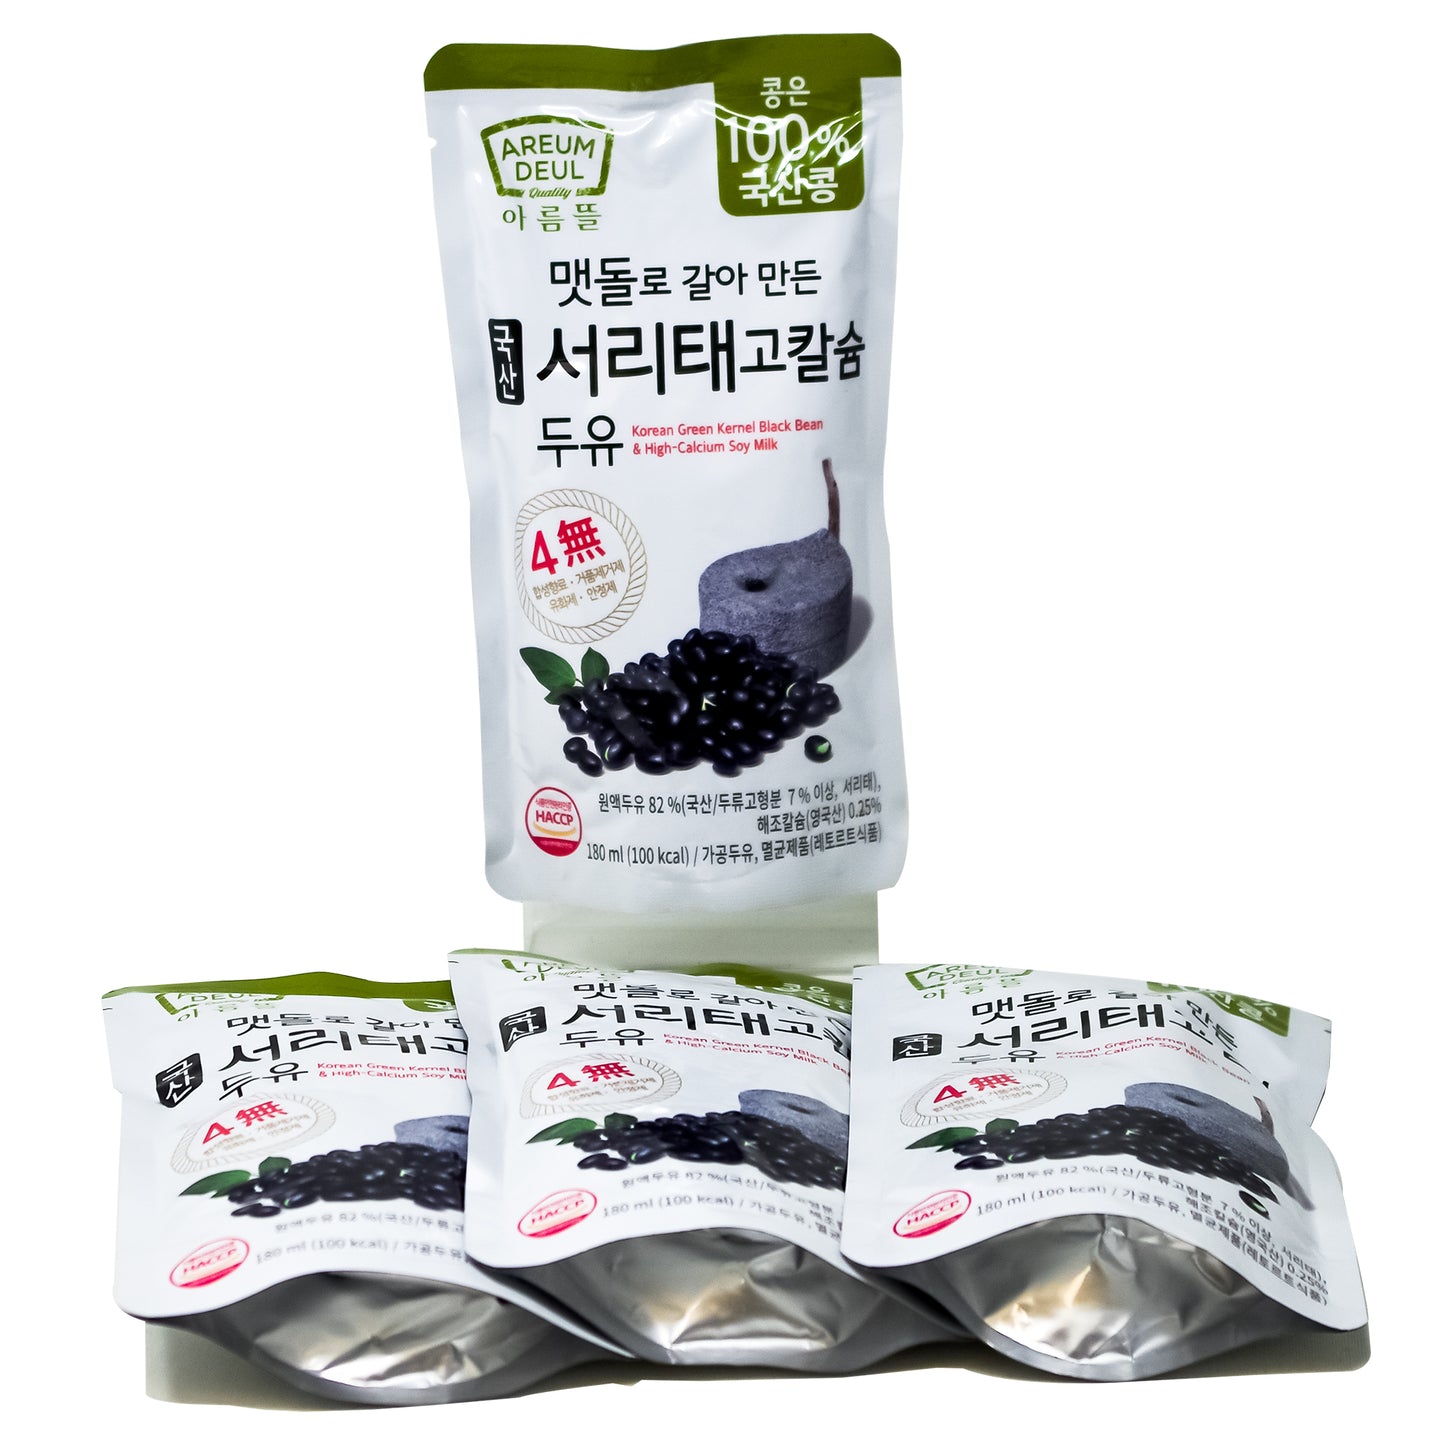 Areumdeul Premium Korean Green Kernel Black Bean & High Calcium Soy Milk, 6.0 Fl. Ounce (Pack of 15) 아름뜰 맷돌로 갈아만든 서리태 고칼슘 두유